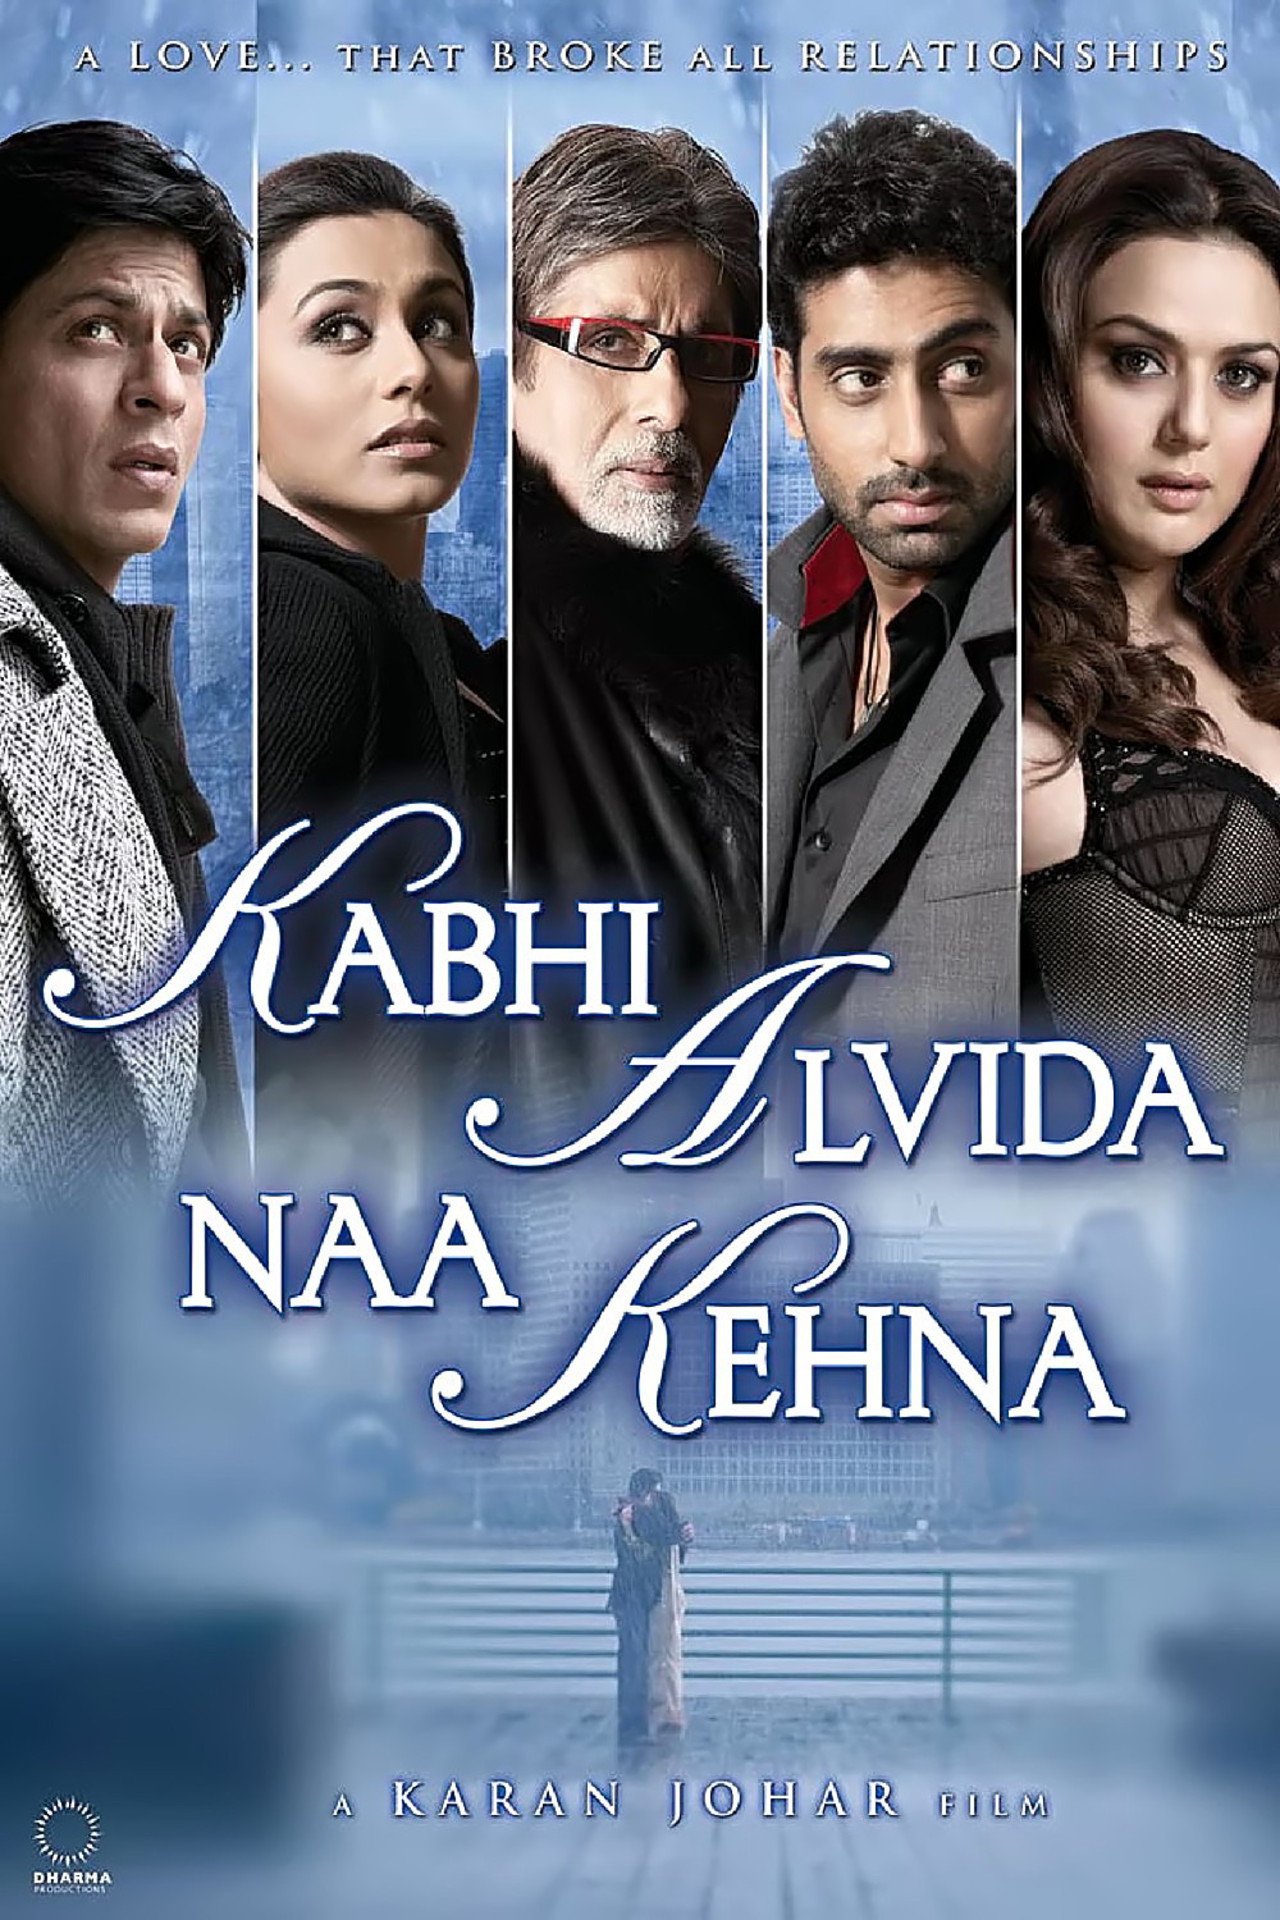 Kabhi Alvida Naa Kehna movie poster 